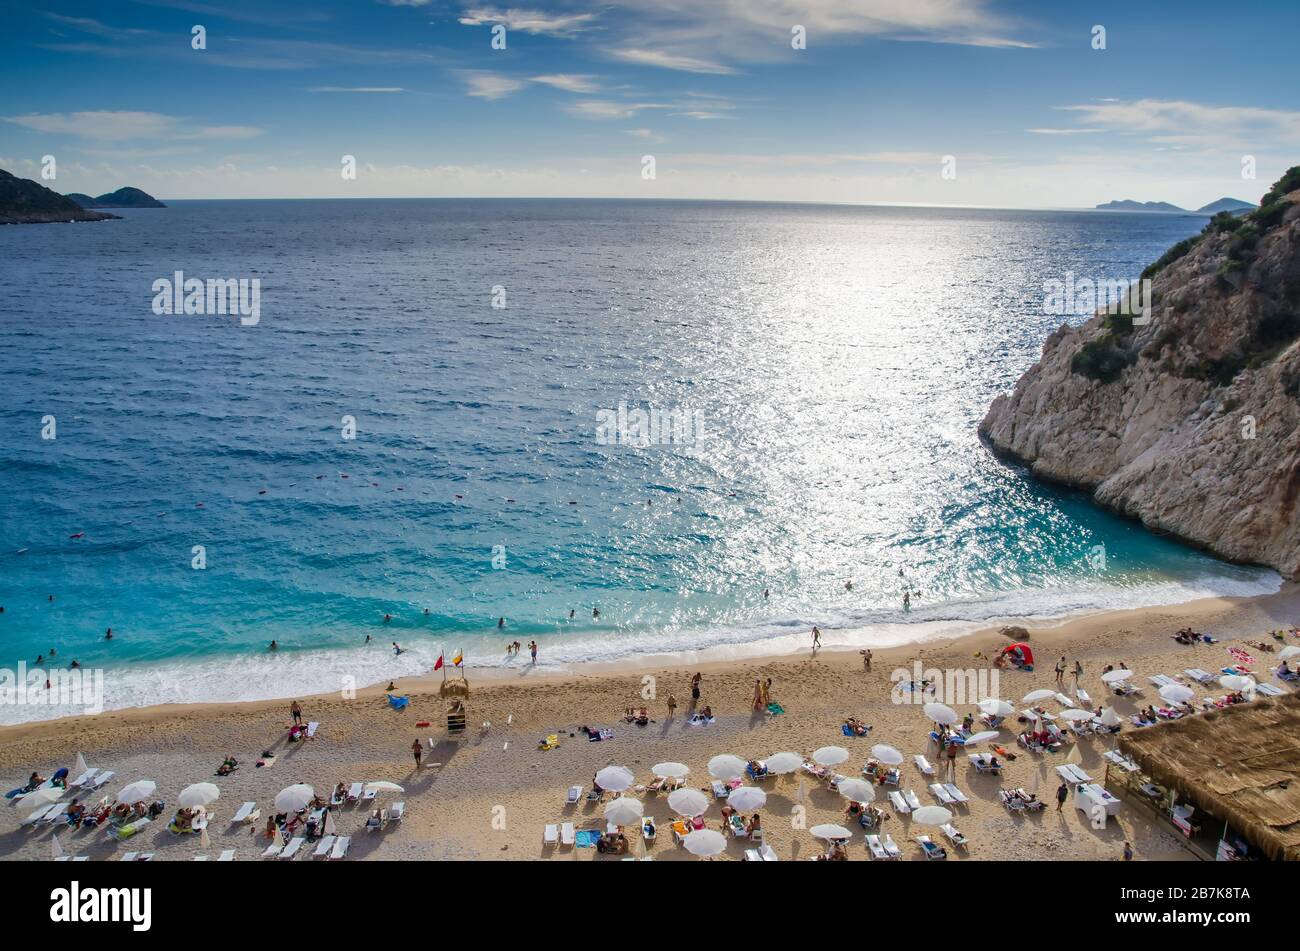 Antalya, Kas region,Turkey - September, 28, 2015: The famous Kaputas Beach. People entering the sea and the beach. Beach umbrellas and sunbeds. View Stock Photo